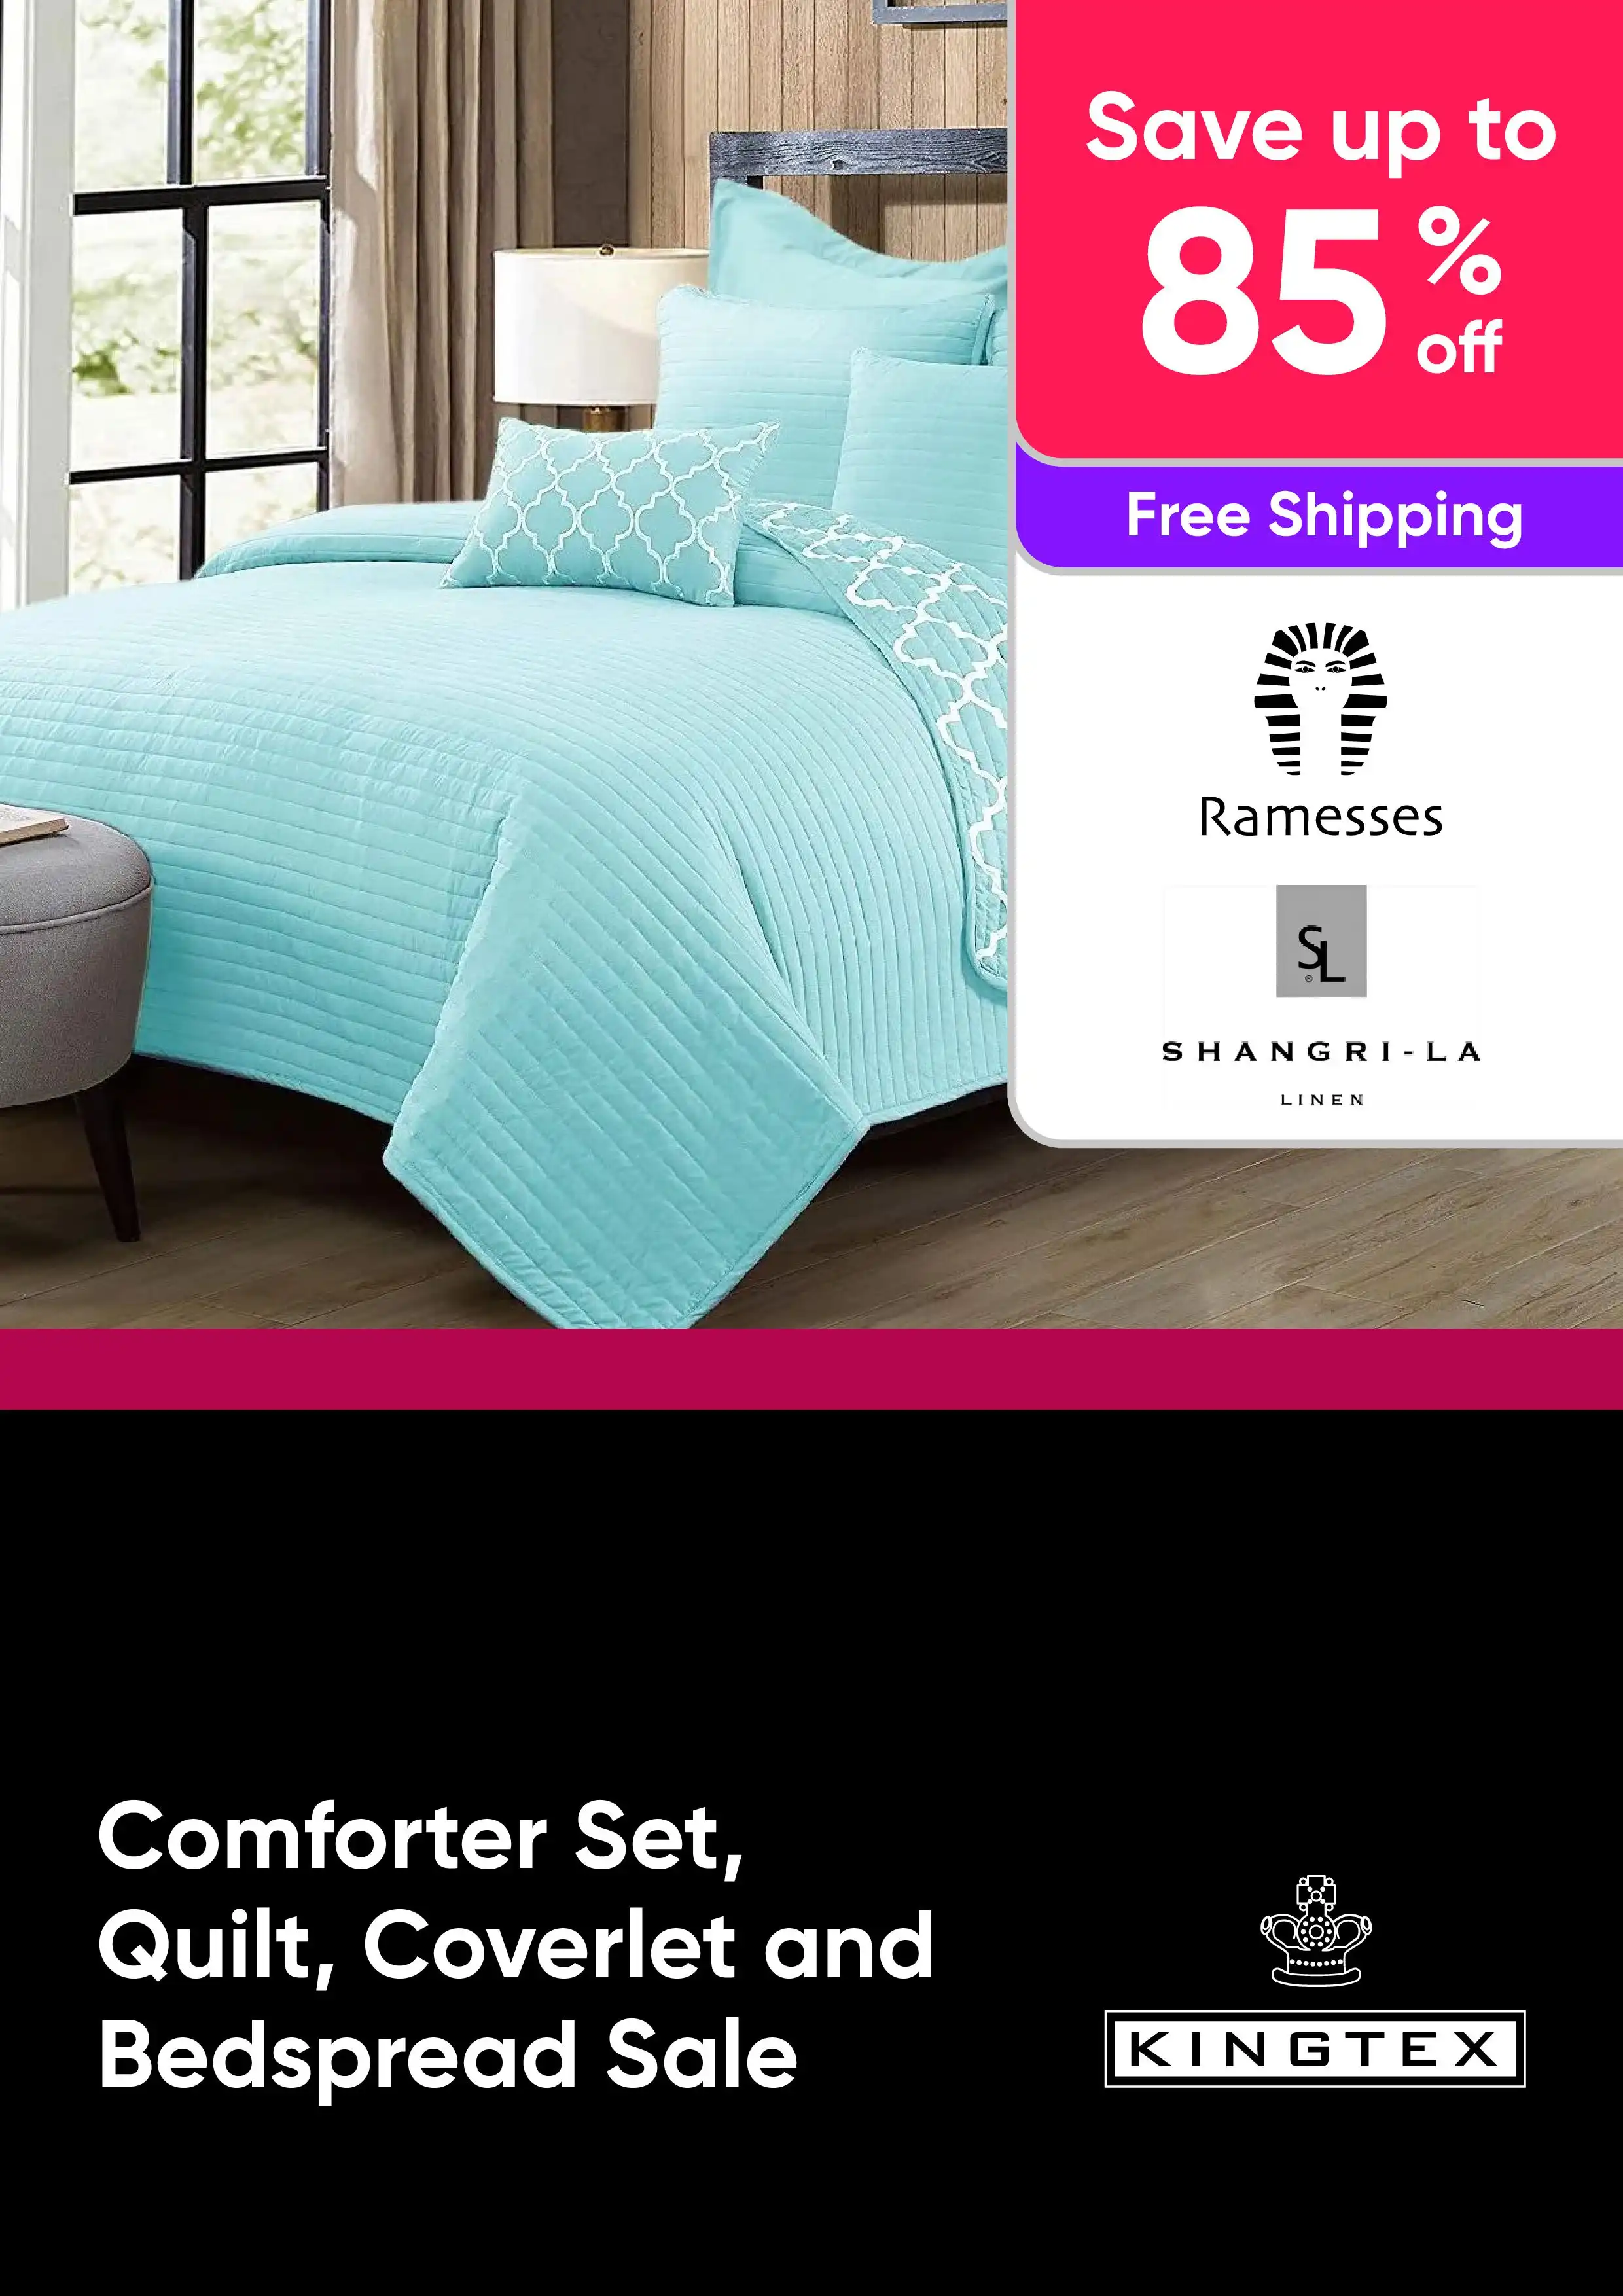 Comforter Set, Quilt, Coverlet and Bedspread Sale - Ramesses, Shangir-la - Up to 85% Off